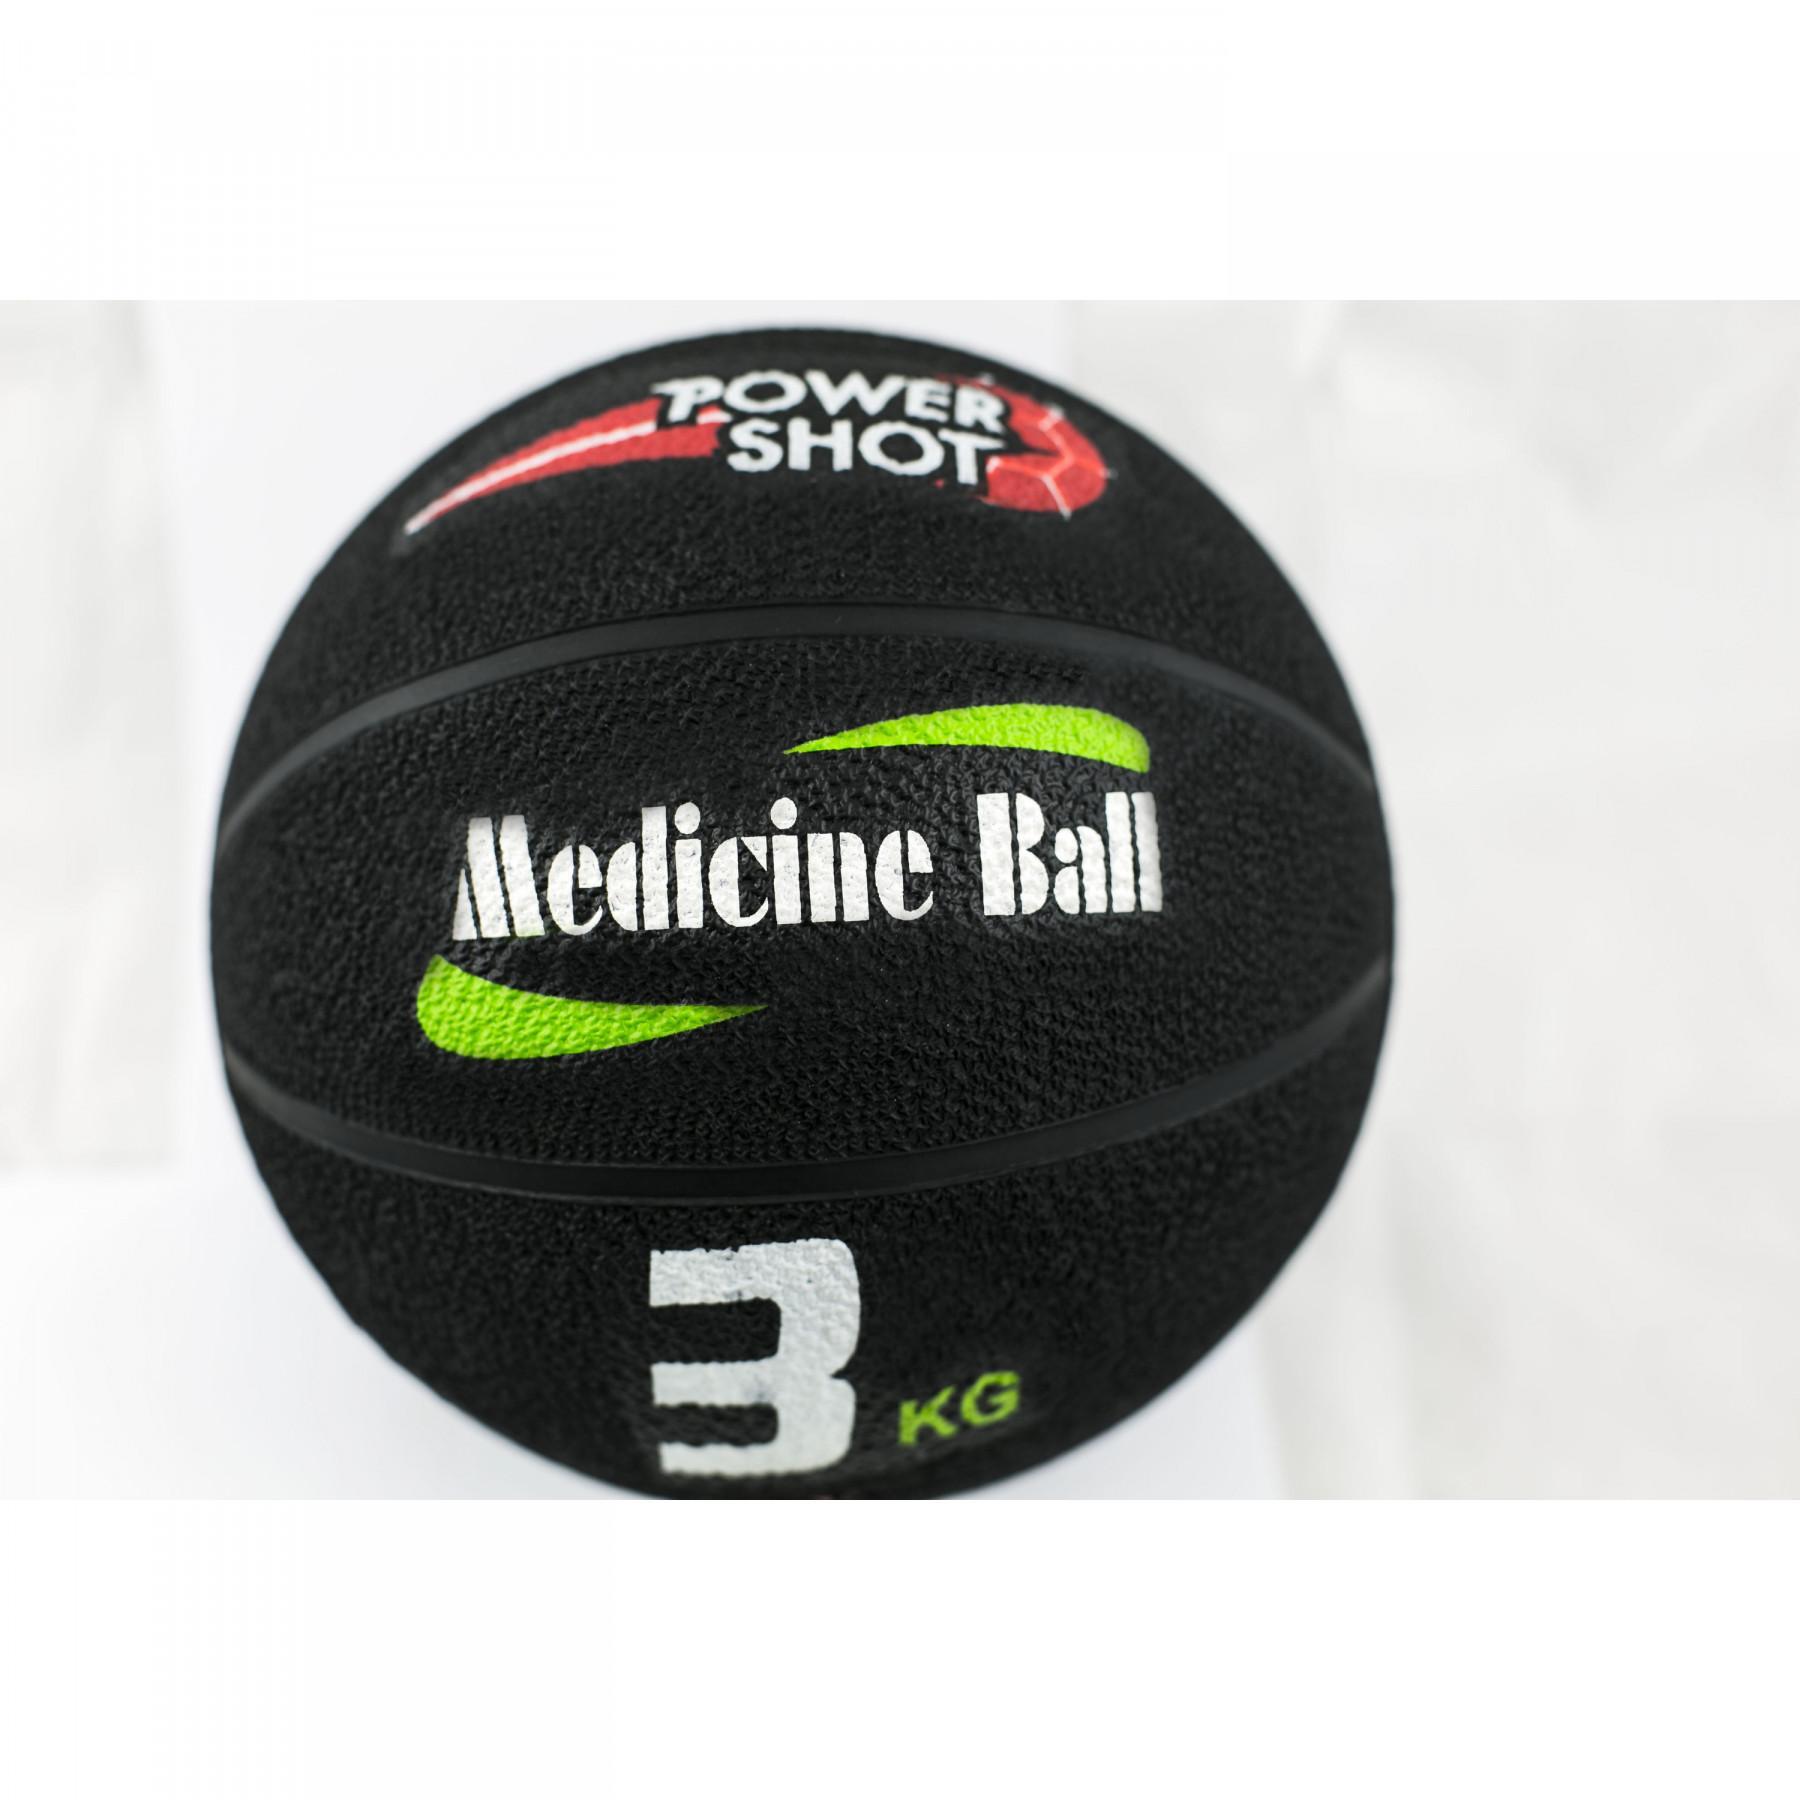 Medecine ball - 3kg PowerShot